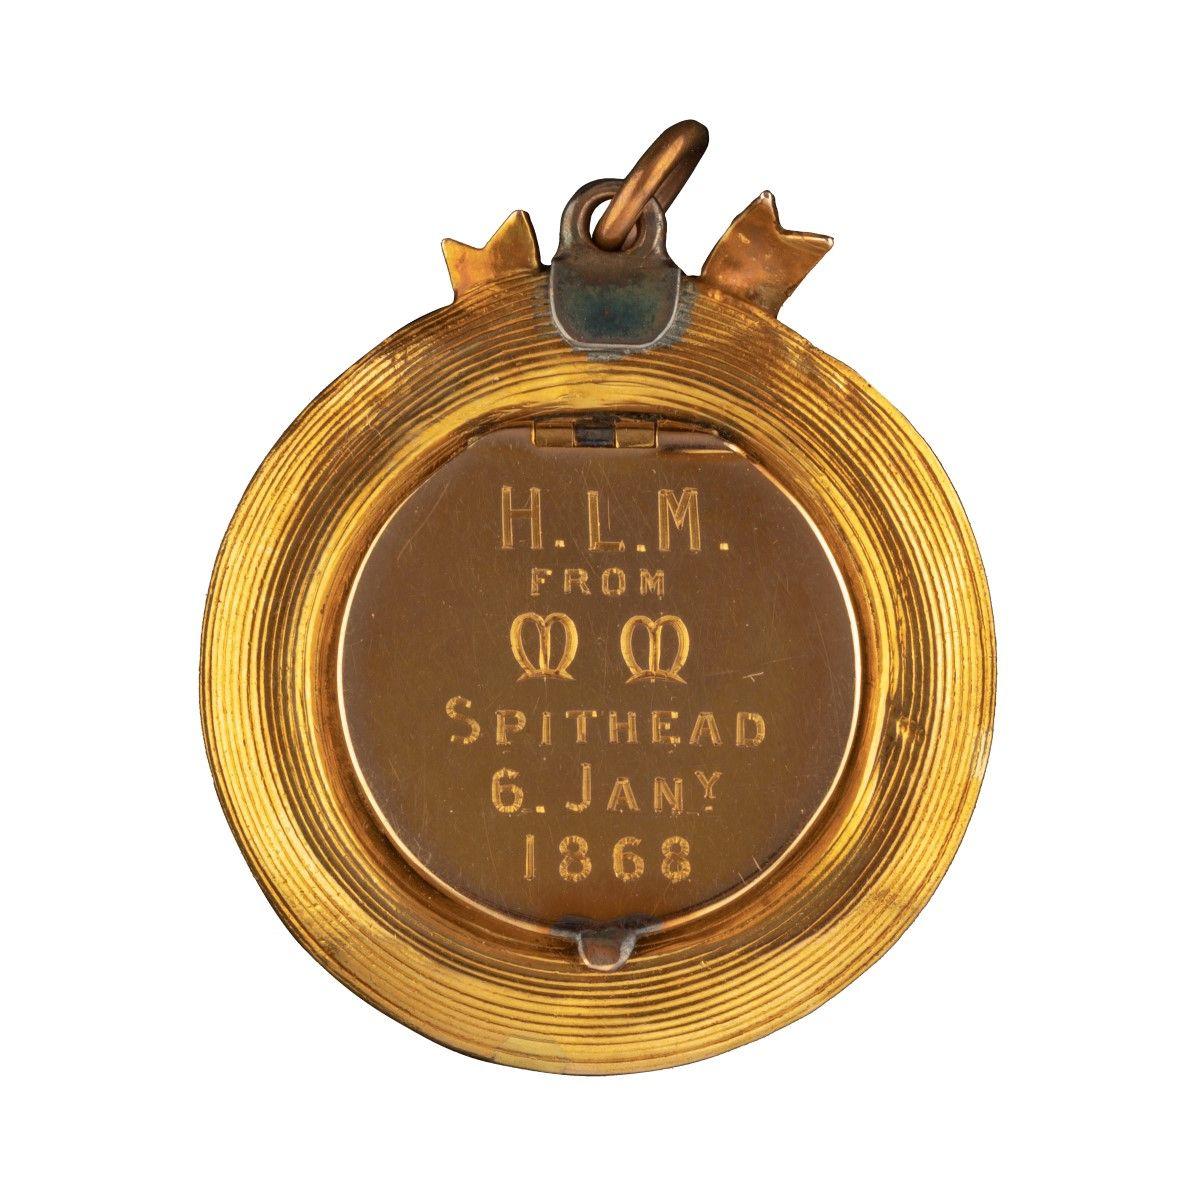 Admiral McGregor’s HMS Danae vinaigrette locket, 1868